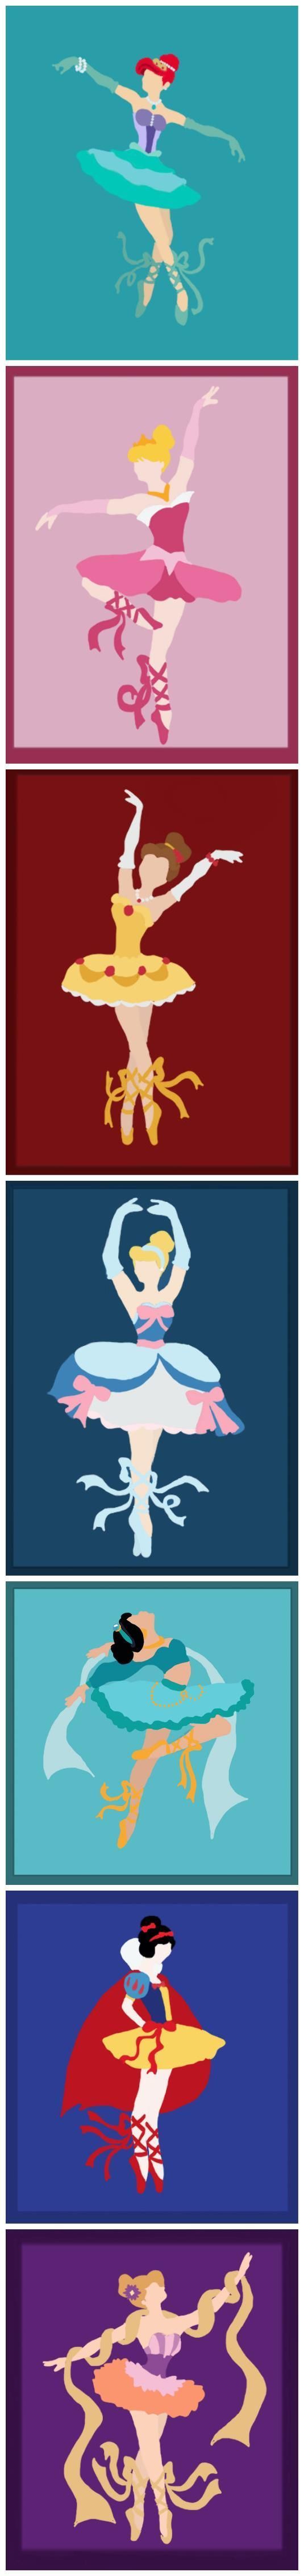 Disney princesses as ballerinas!